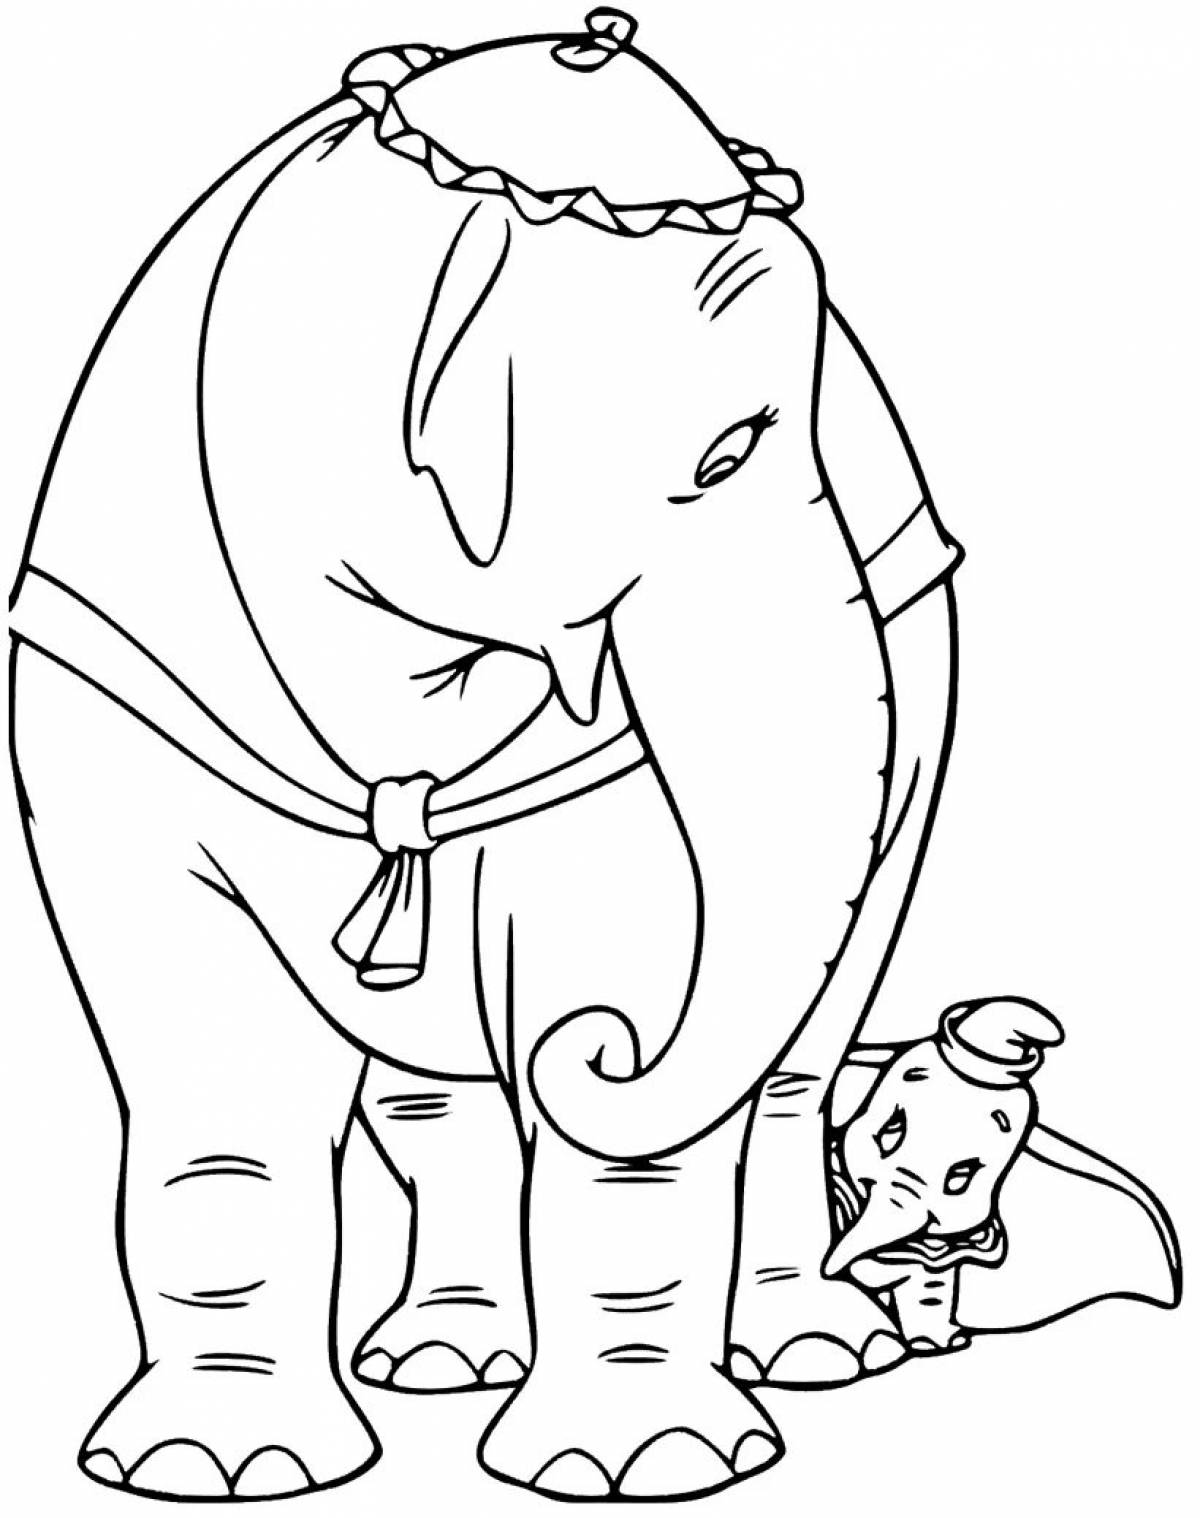 Coloring mystical elephant